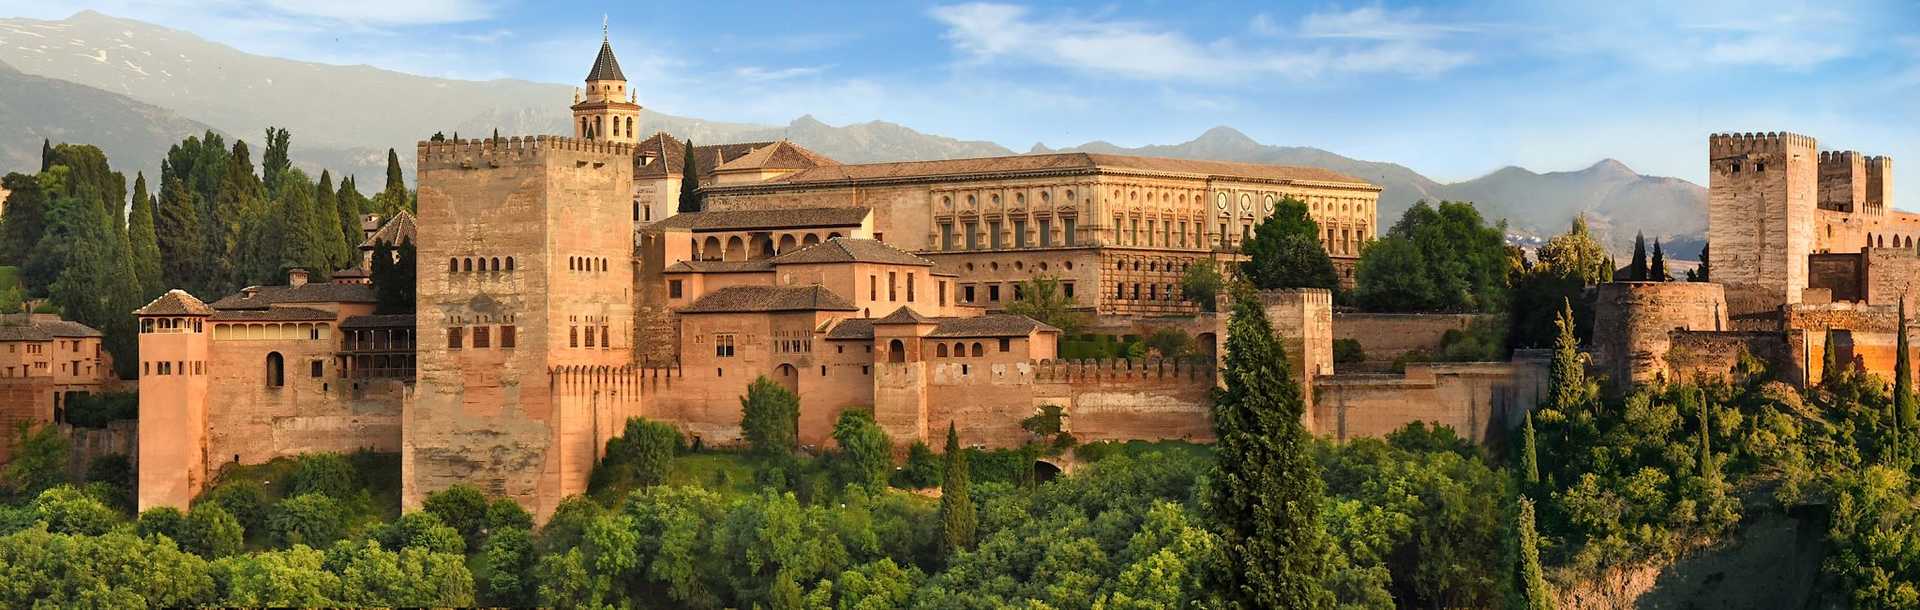 Alhambra Palace in Granada, Spain.